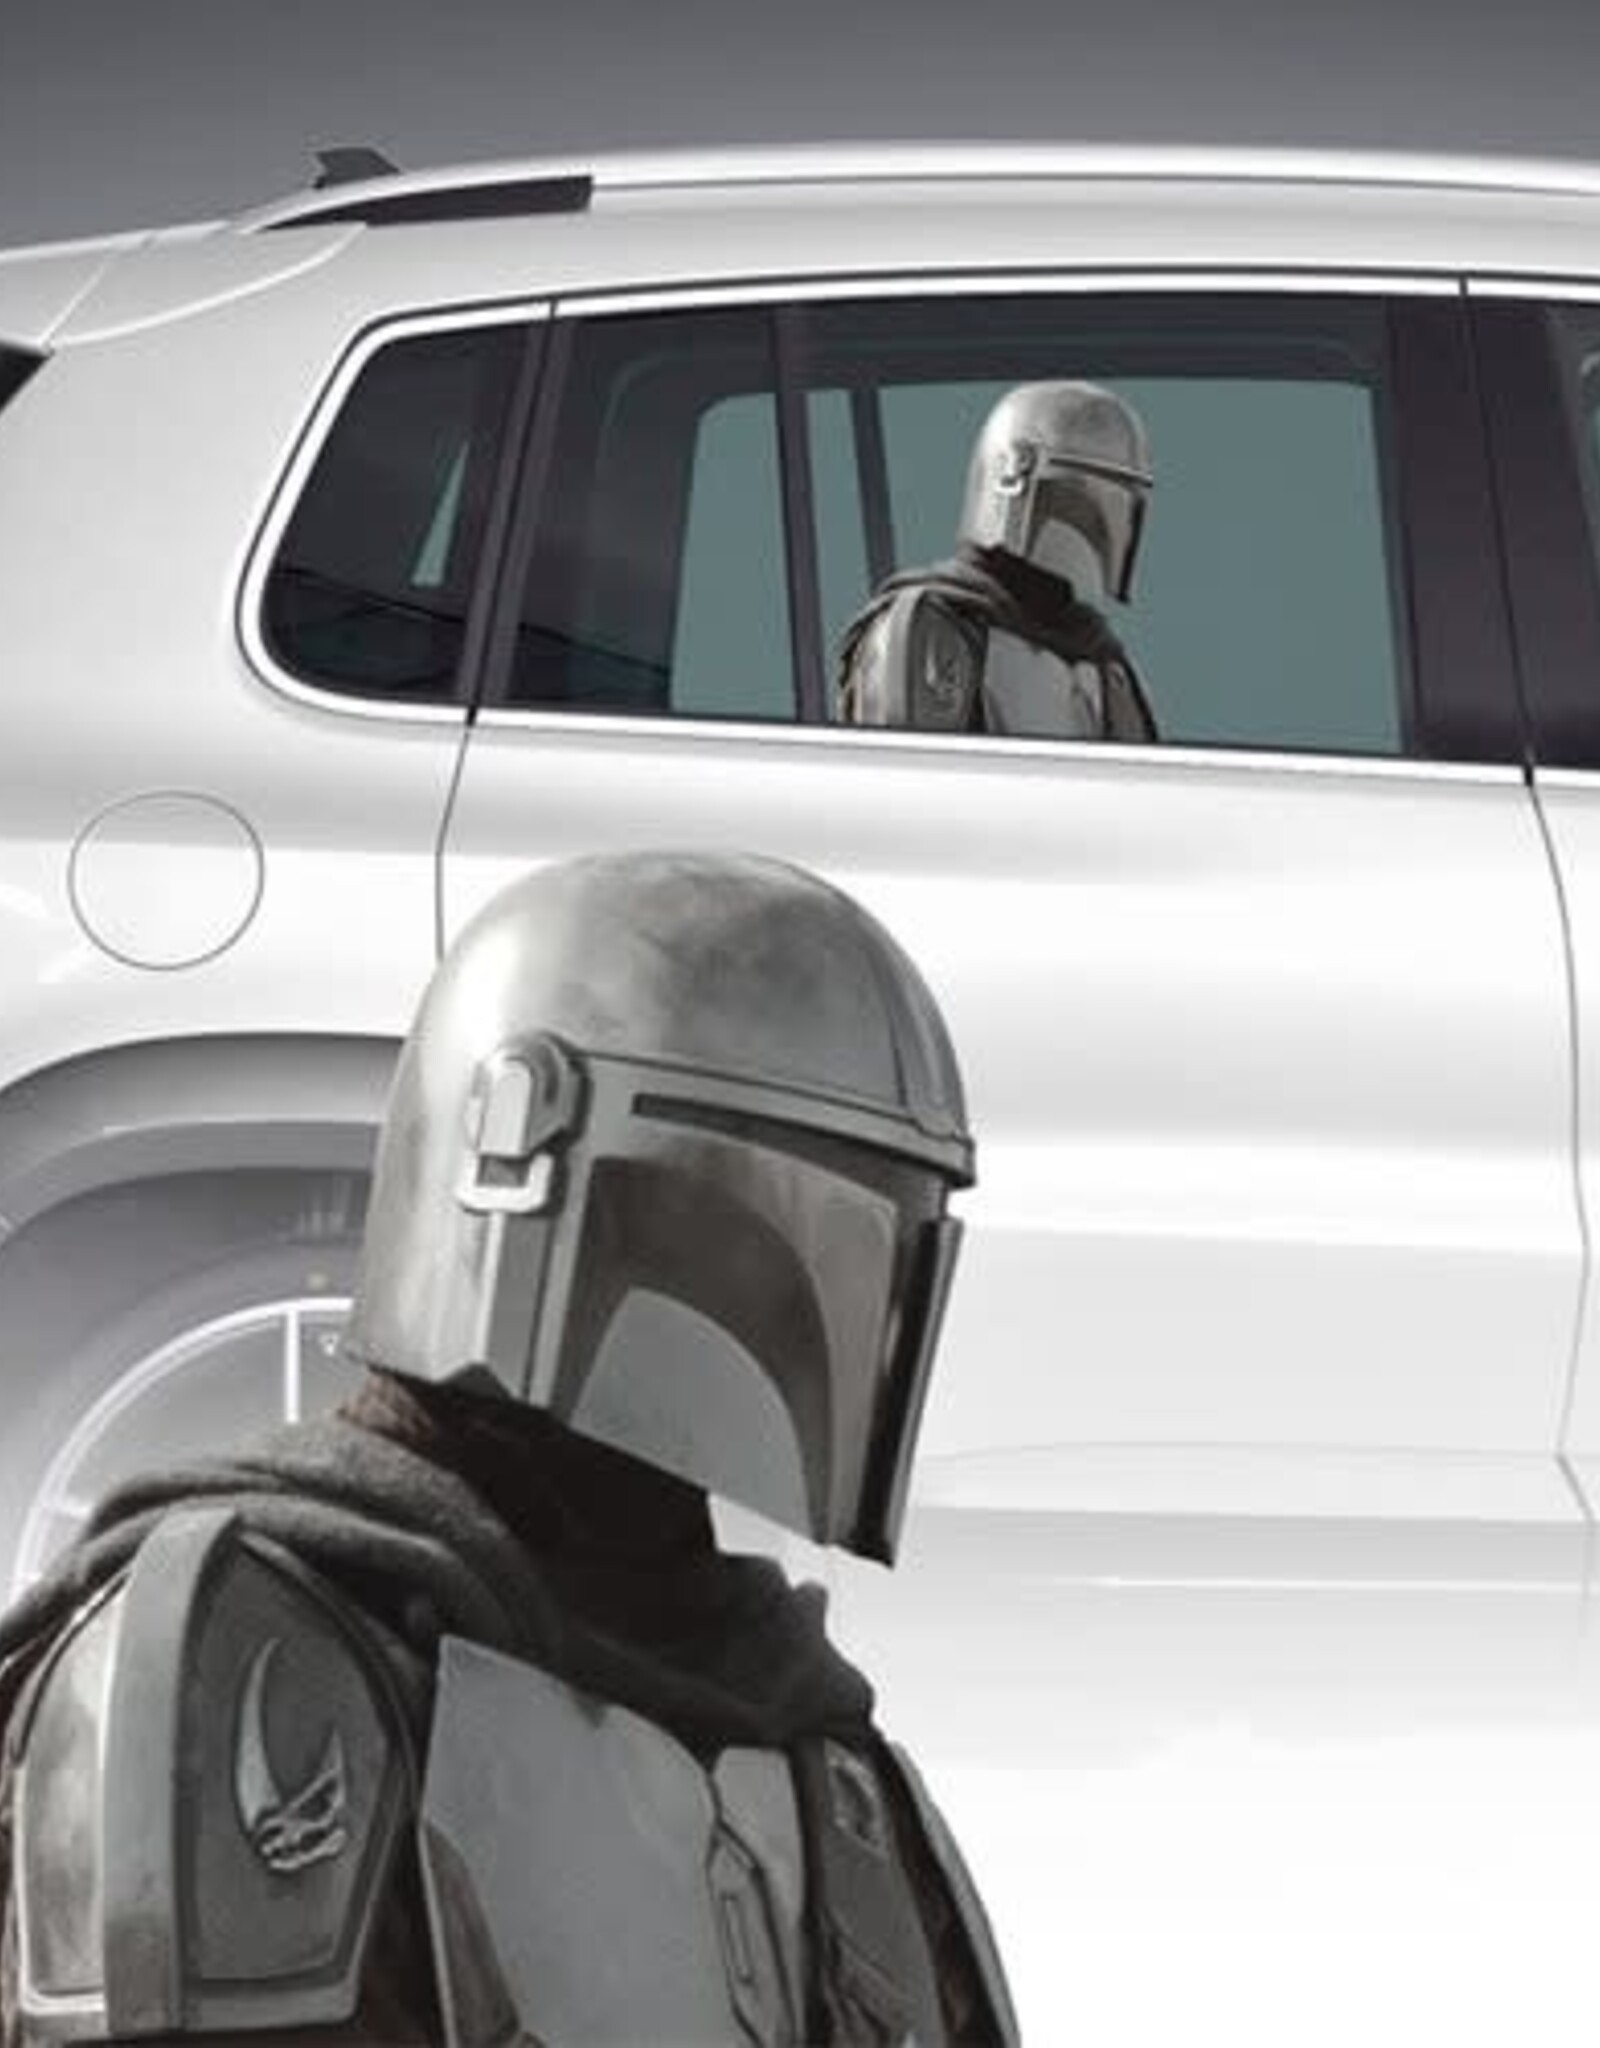 Disney Star Wars Passenger Series Mandalorian Car Decal